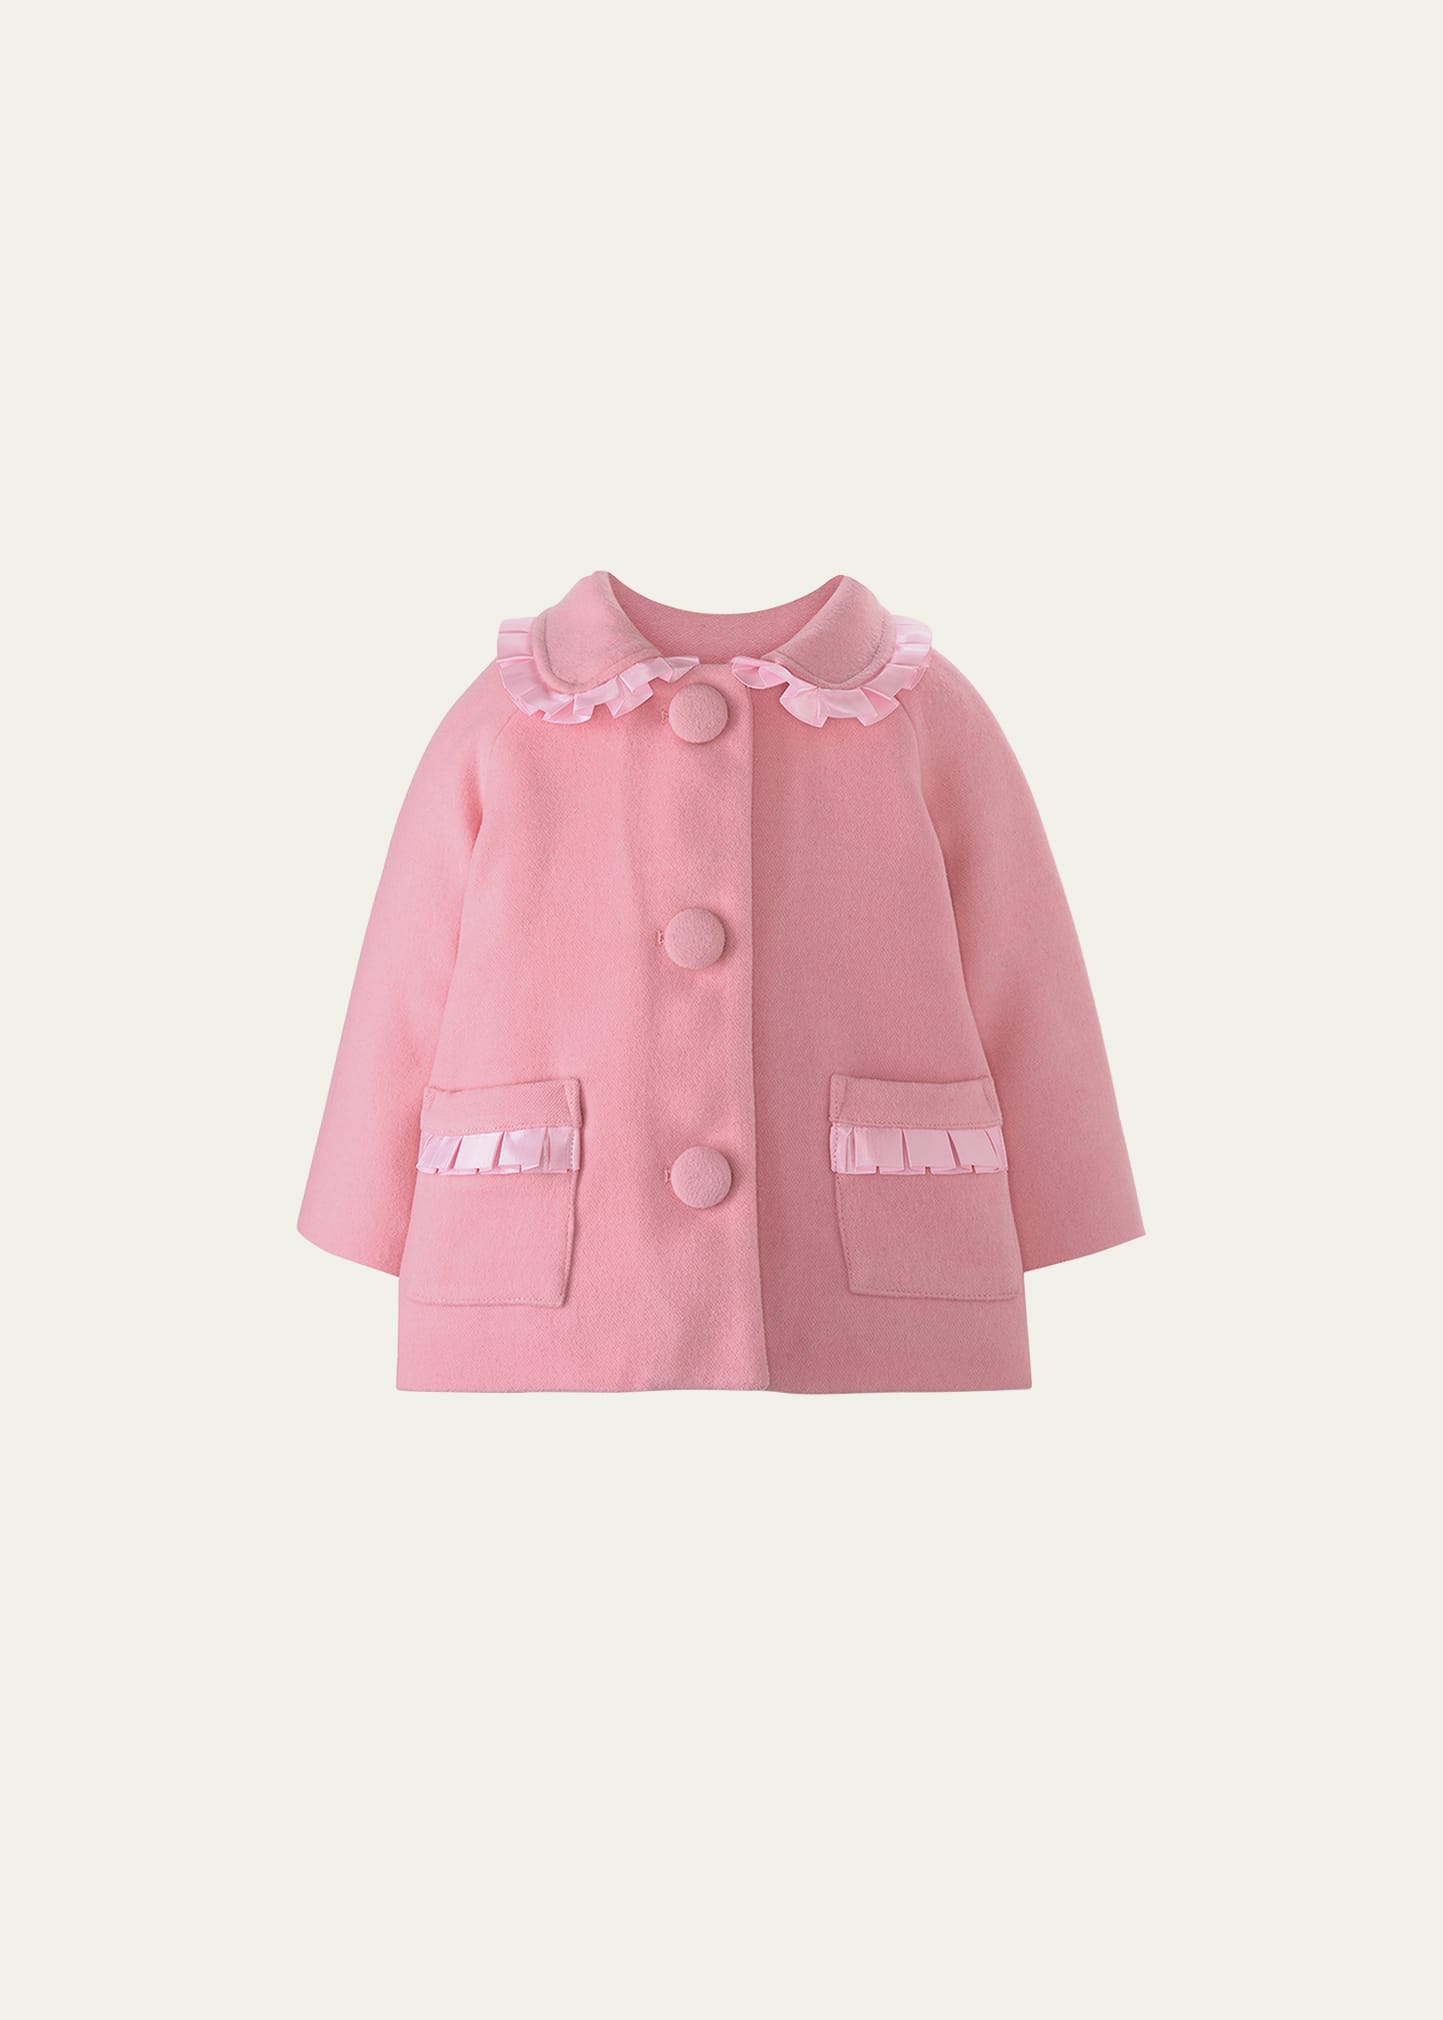 Girl's Pink Ribbon Trim Jacket, Size 6M-24M